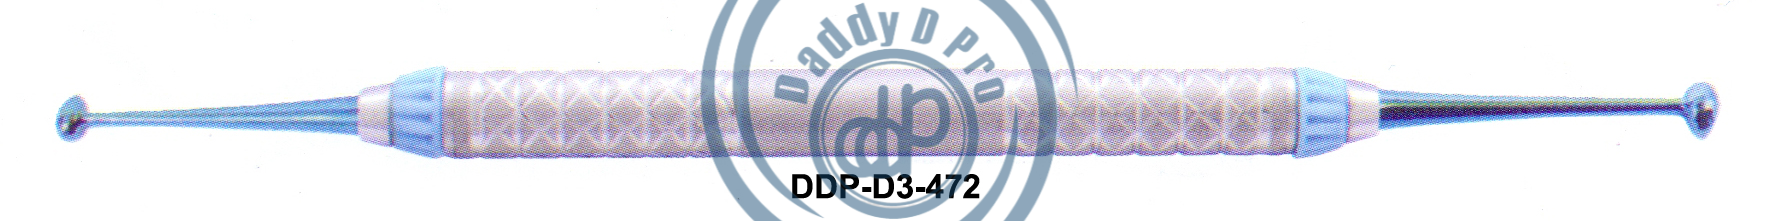 images/DDP-D3-472.png